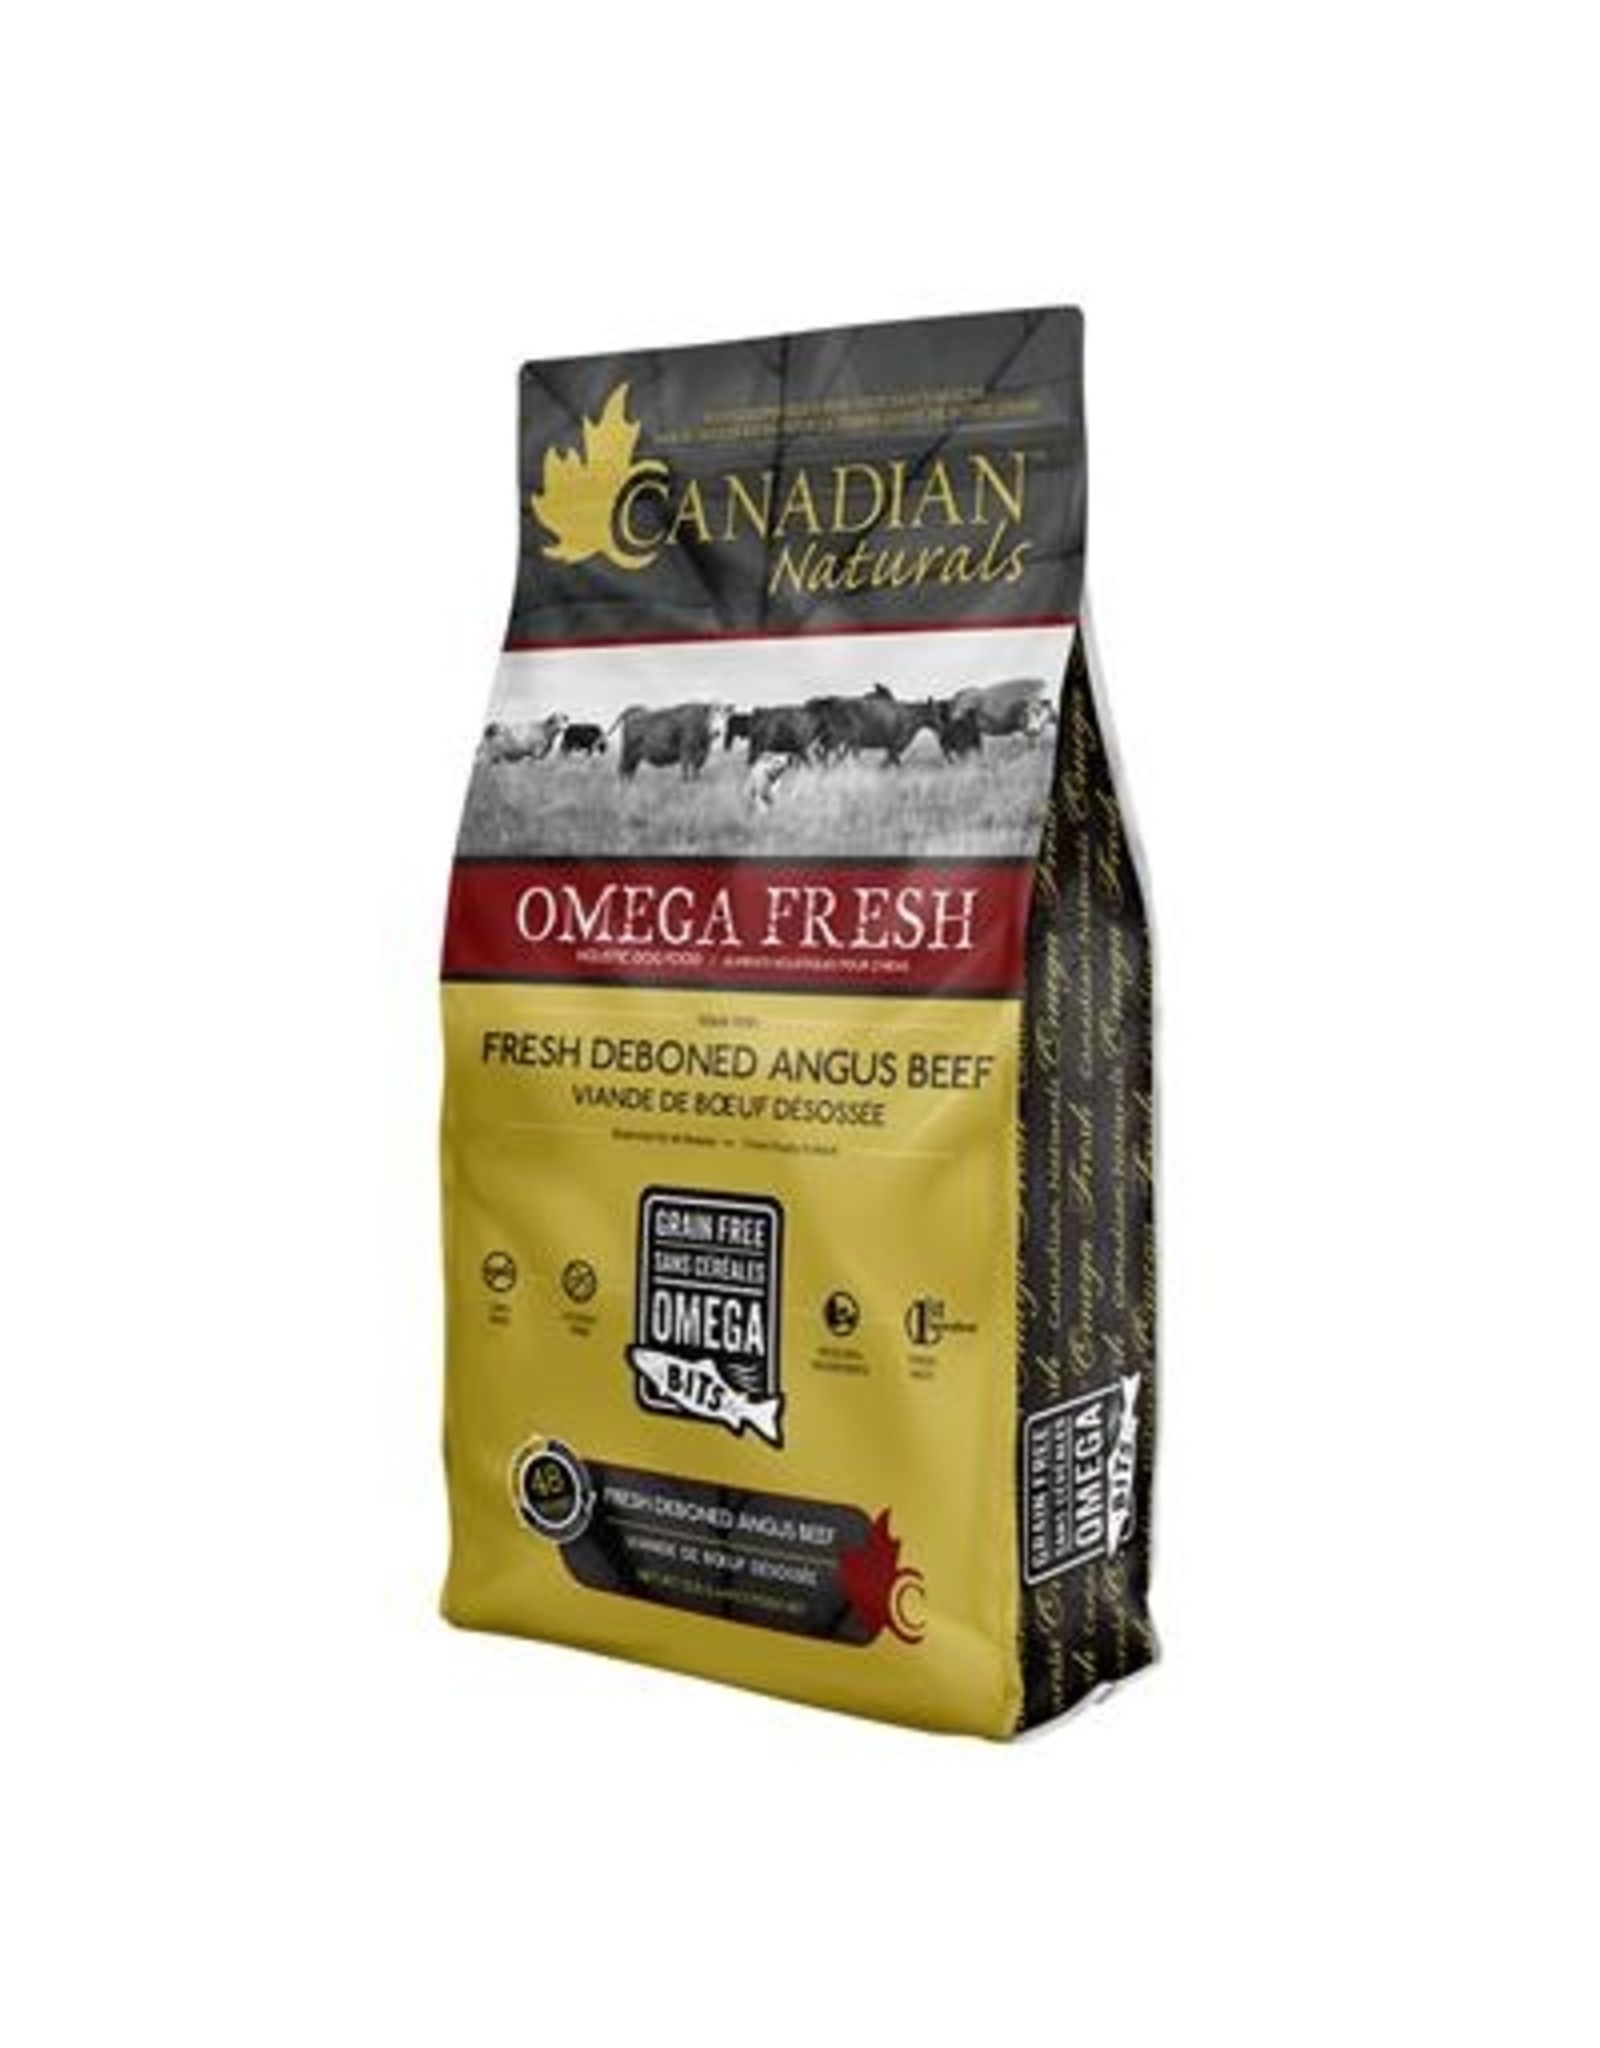 Canadian Naturals Canadian Naturals Omega Fresh Angus Beef